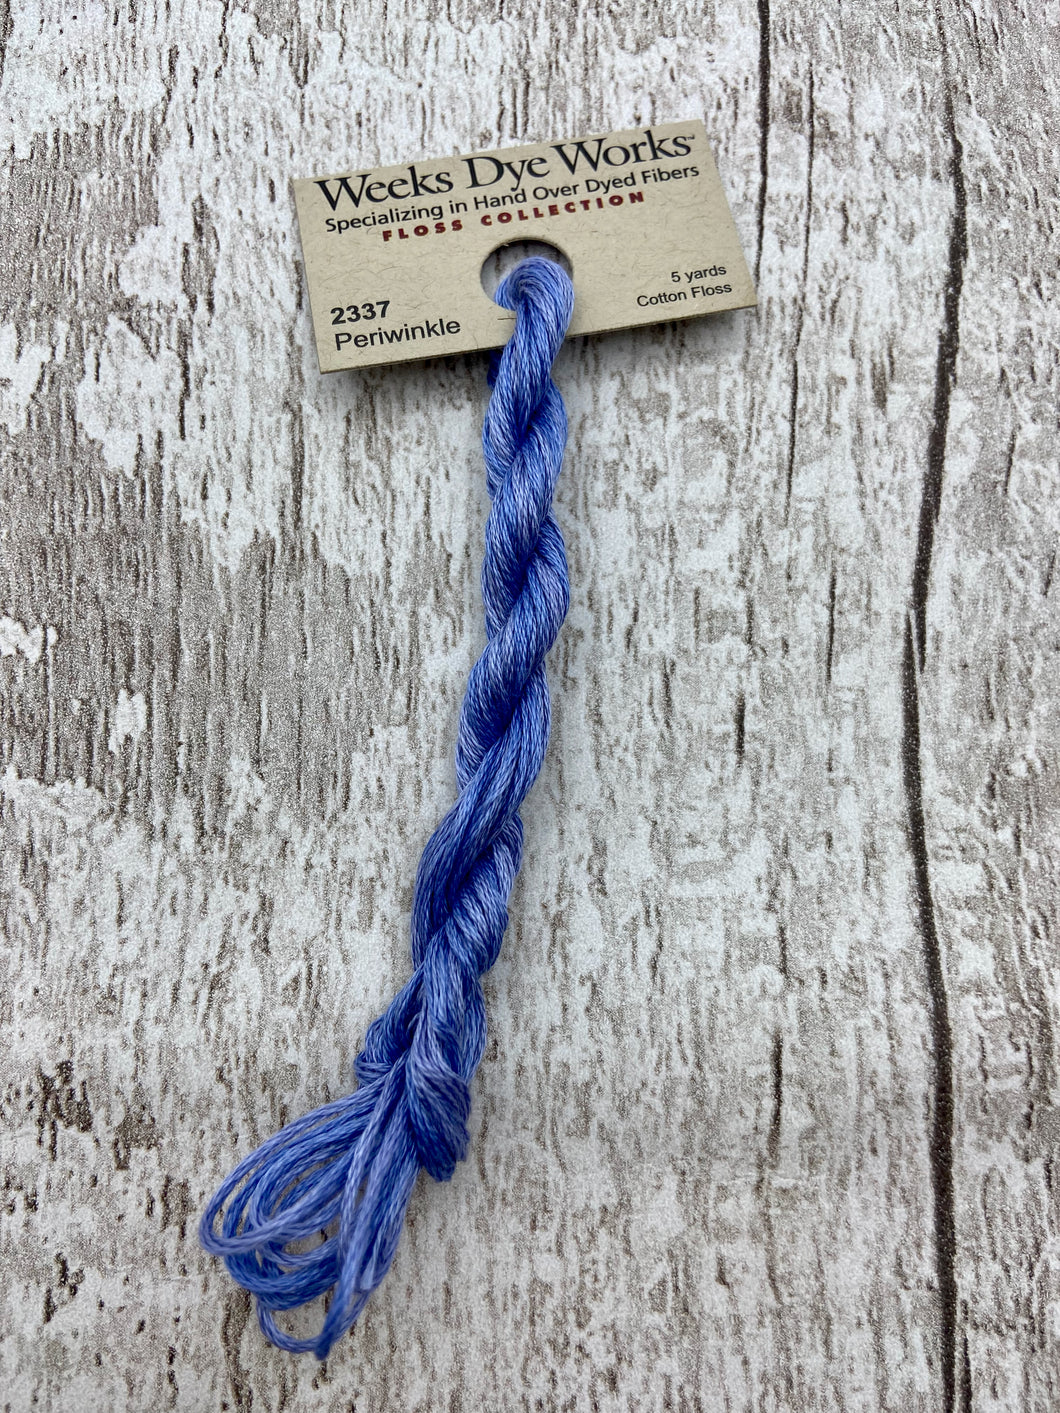 Periwinkle (#2337) Weeks Dye Works, 6-strand cotton floss